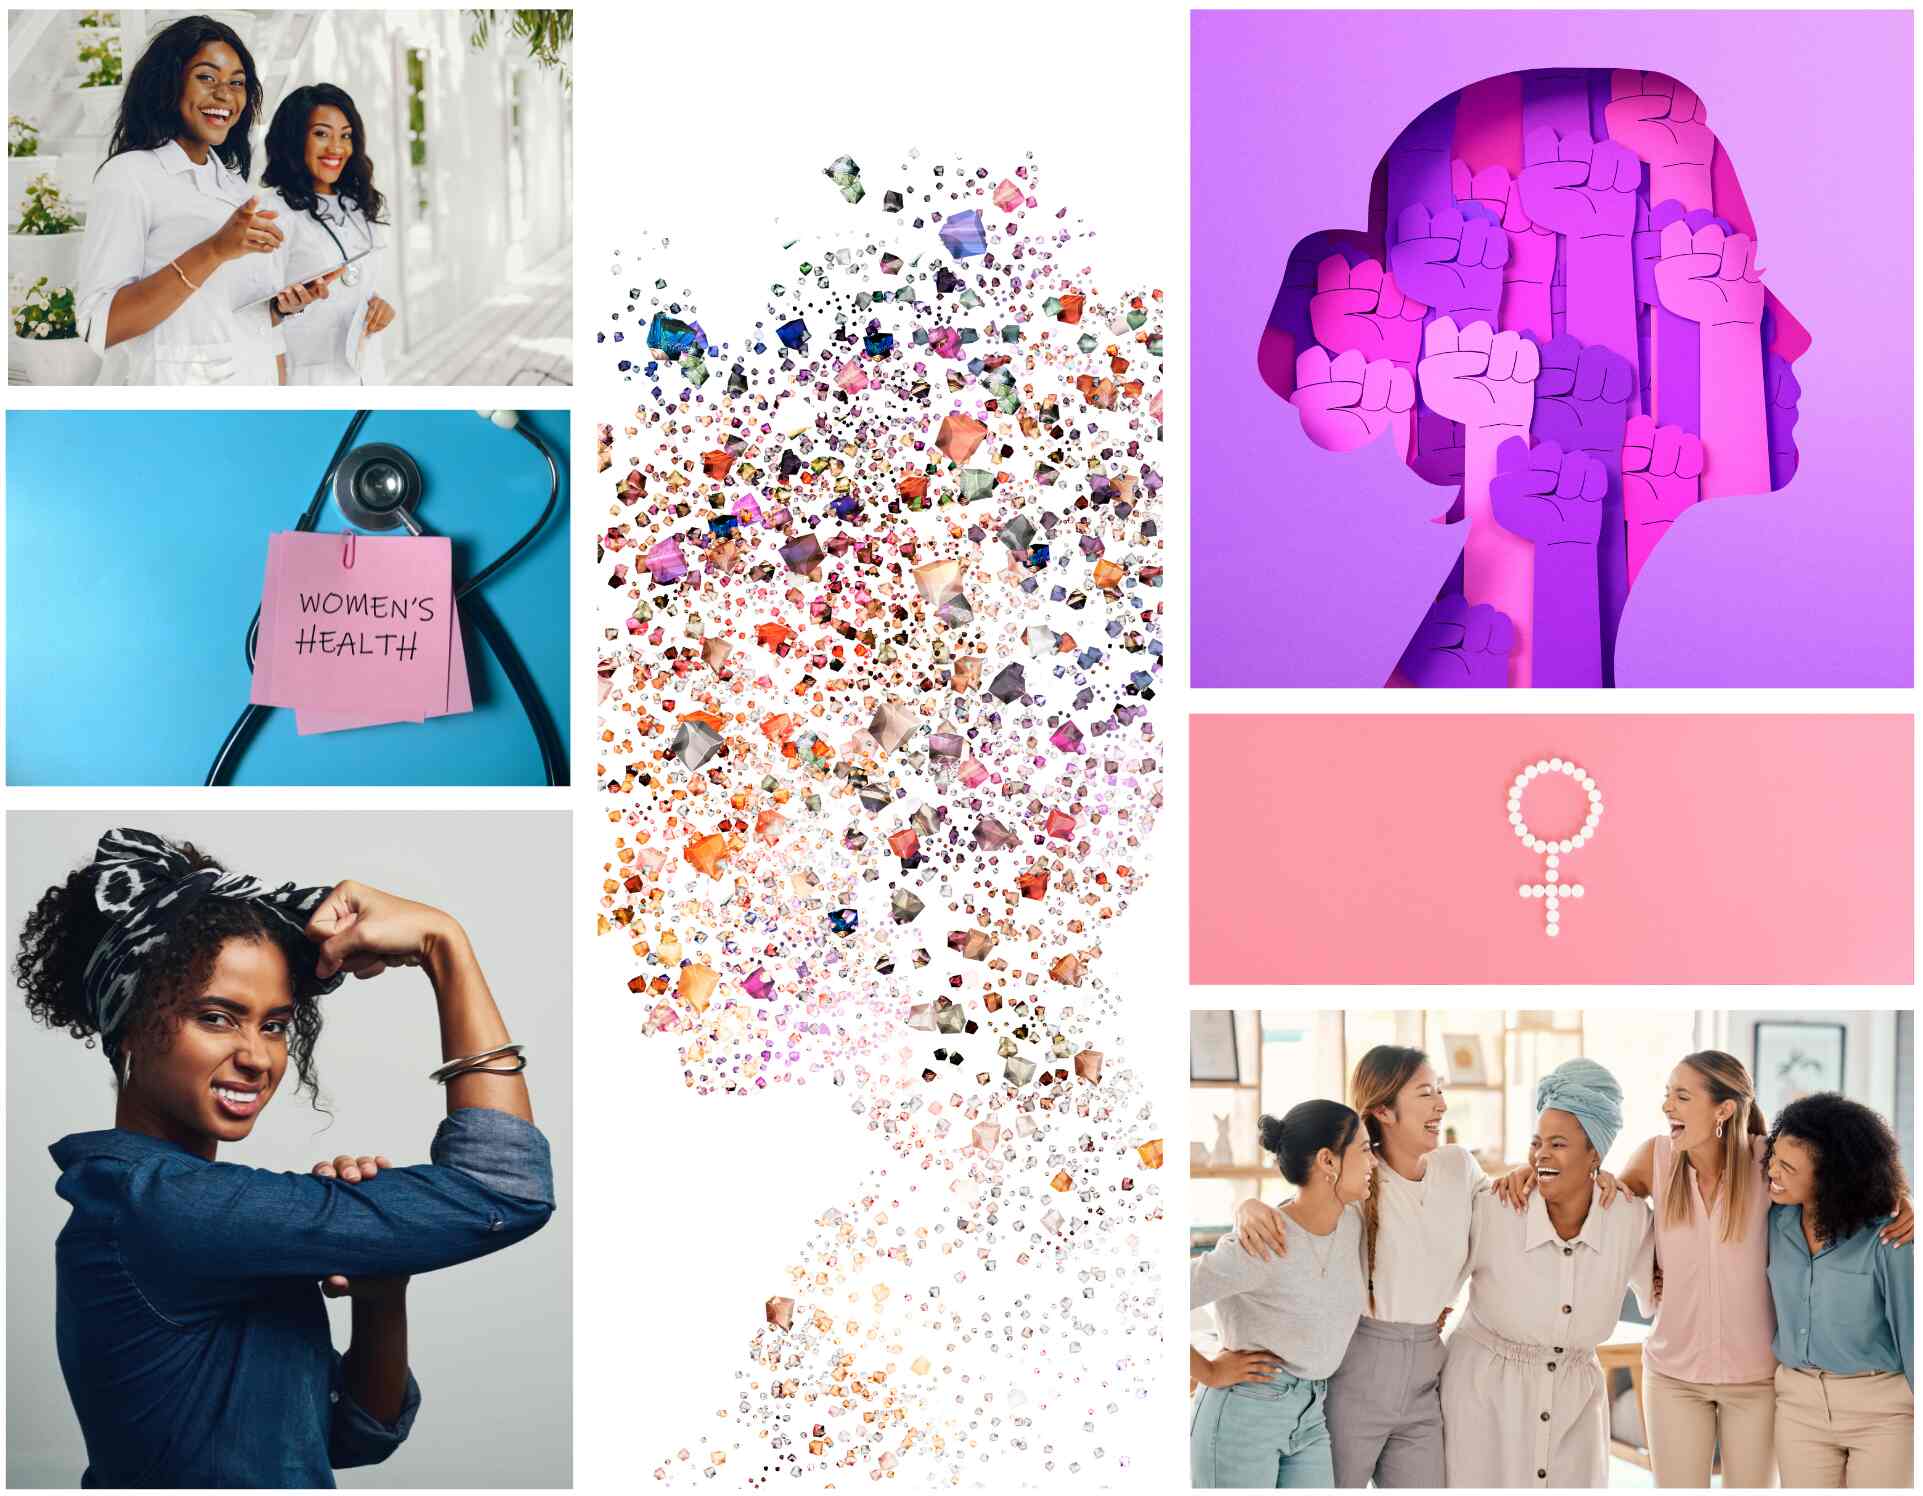 Women's health collage